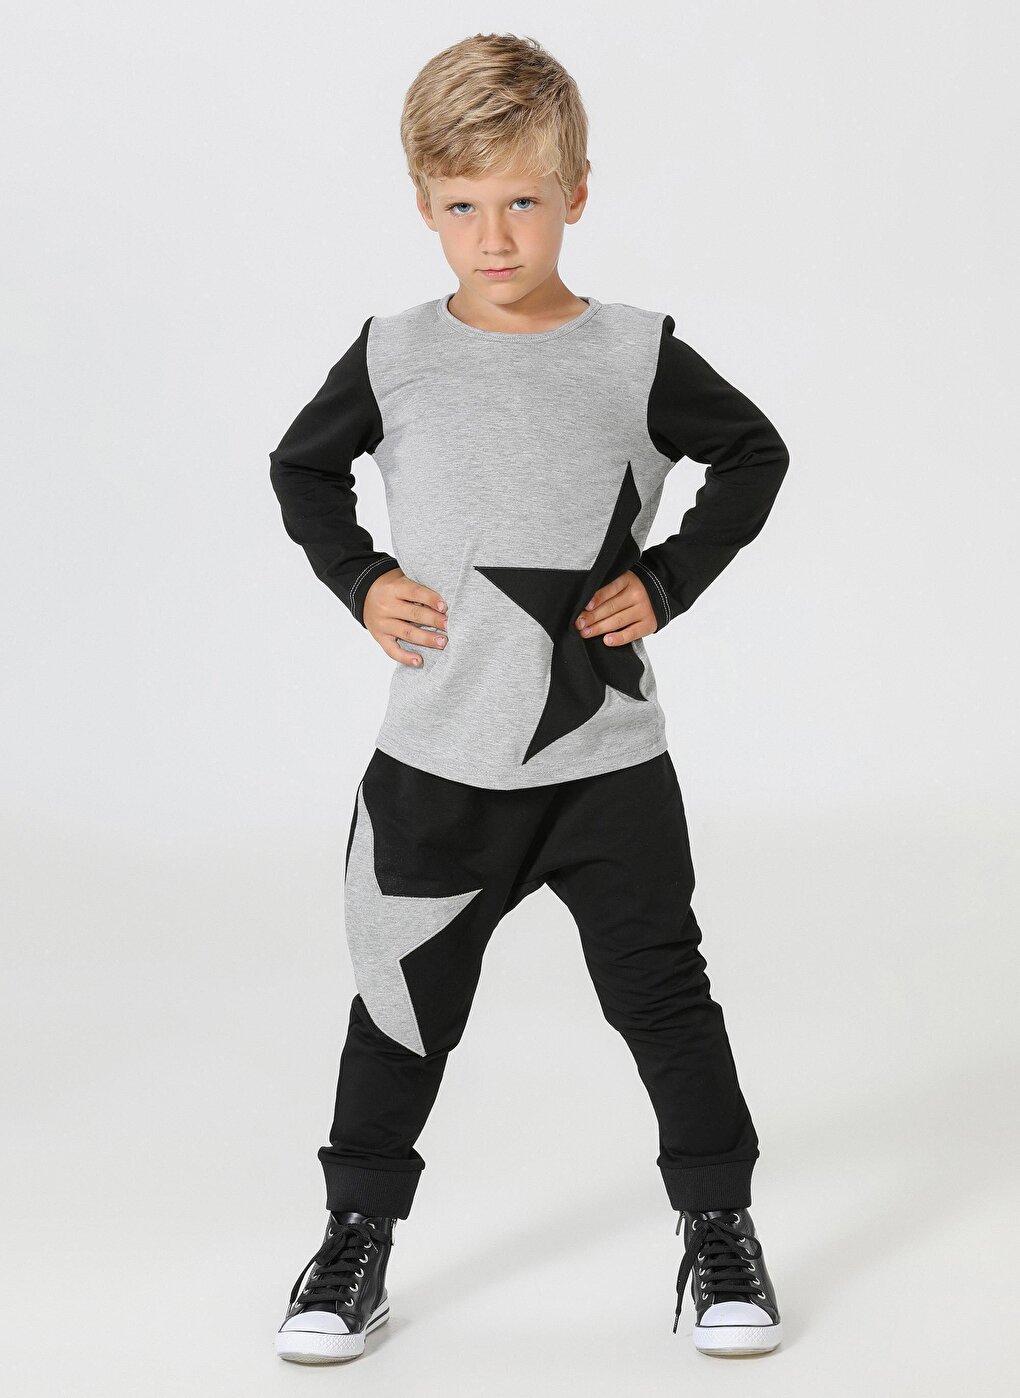 Брюки-шаровары Star + футболка LupiaKids полотер xbot r2 черно серый